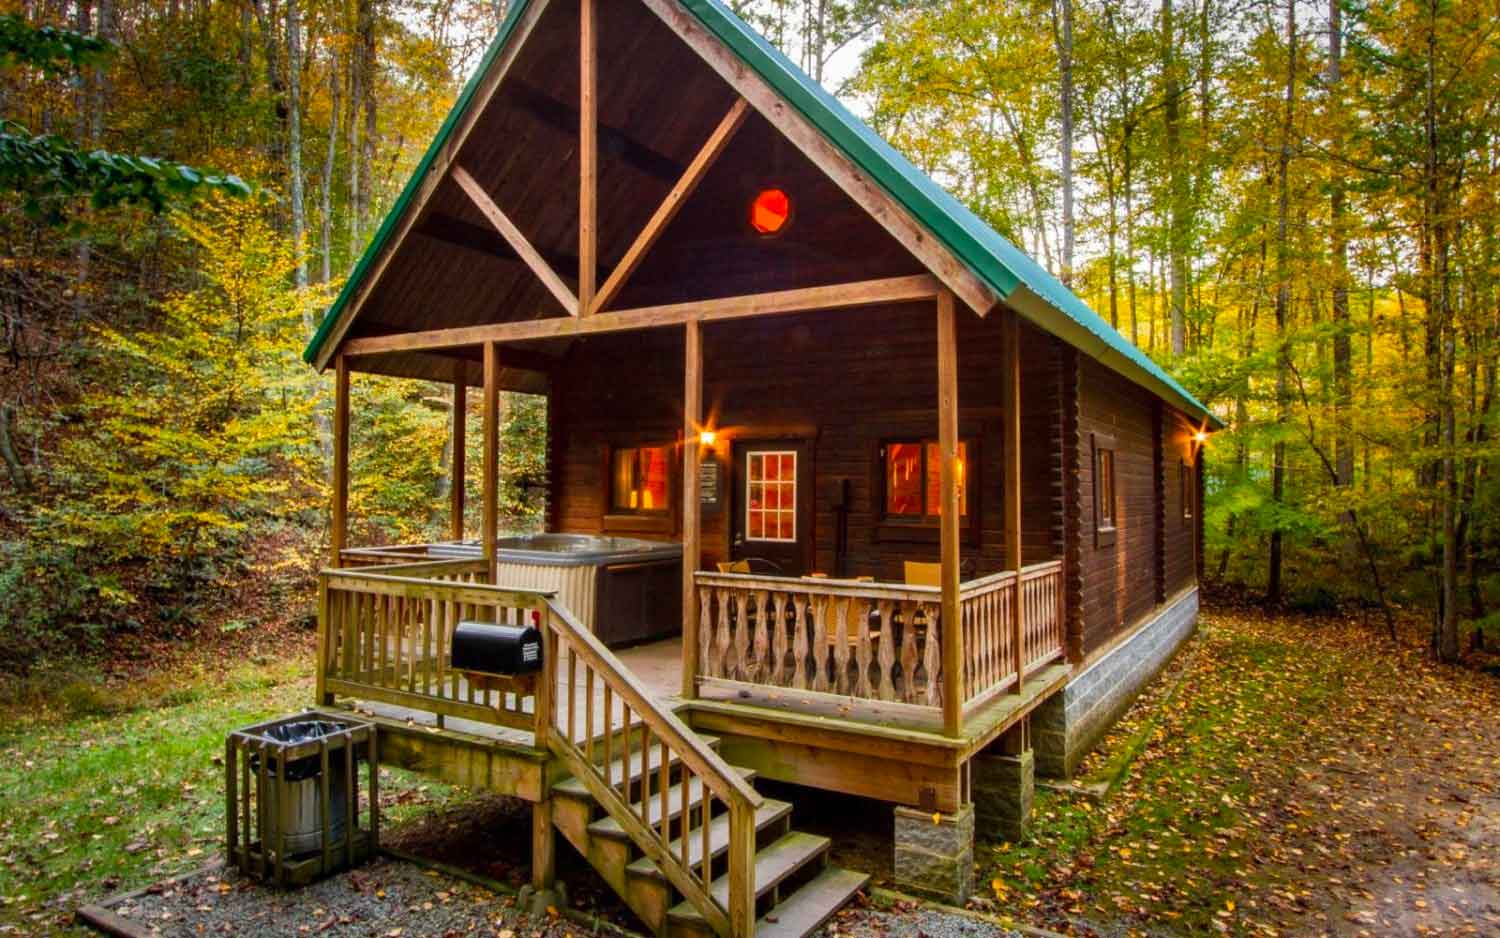 New River Gorge Cabin Rentals   ACE Adventure Resort, West Virginia